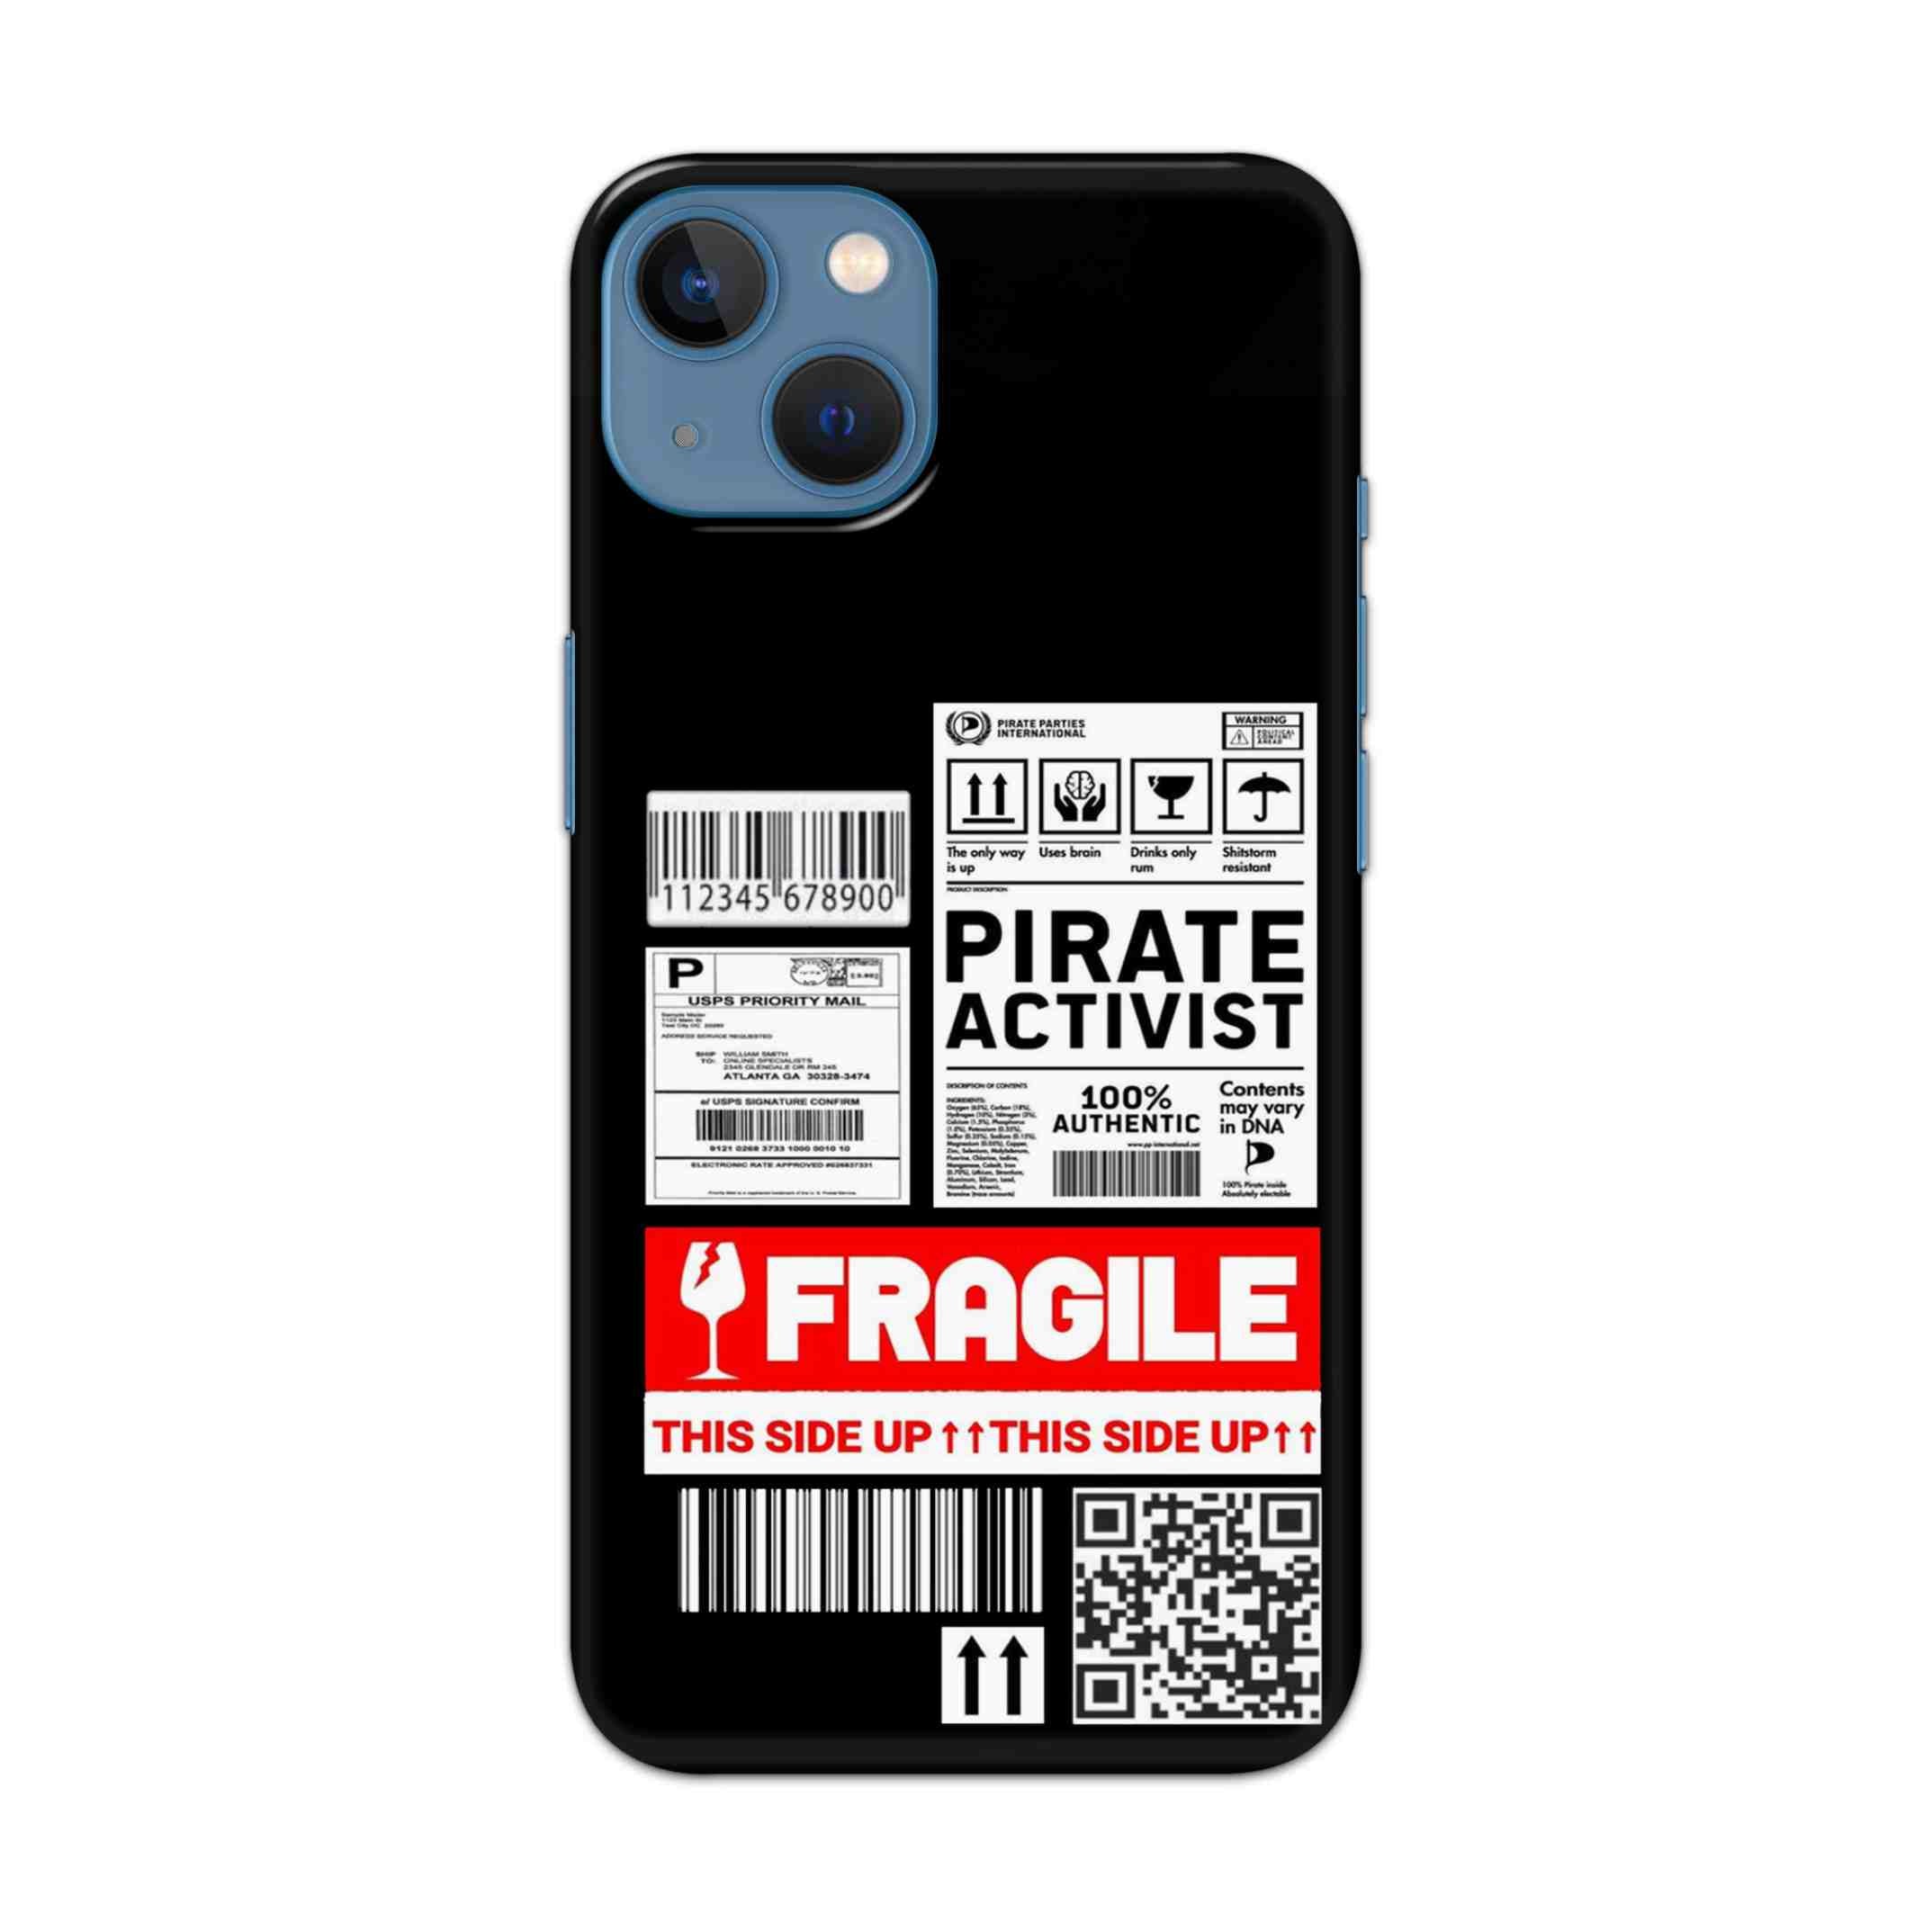 Buy Fragile Hard Back Mobile Phone Case/Cover For Apple iPhone 13 Mini Online